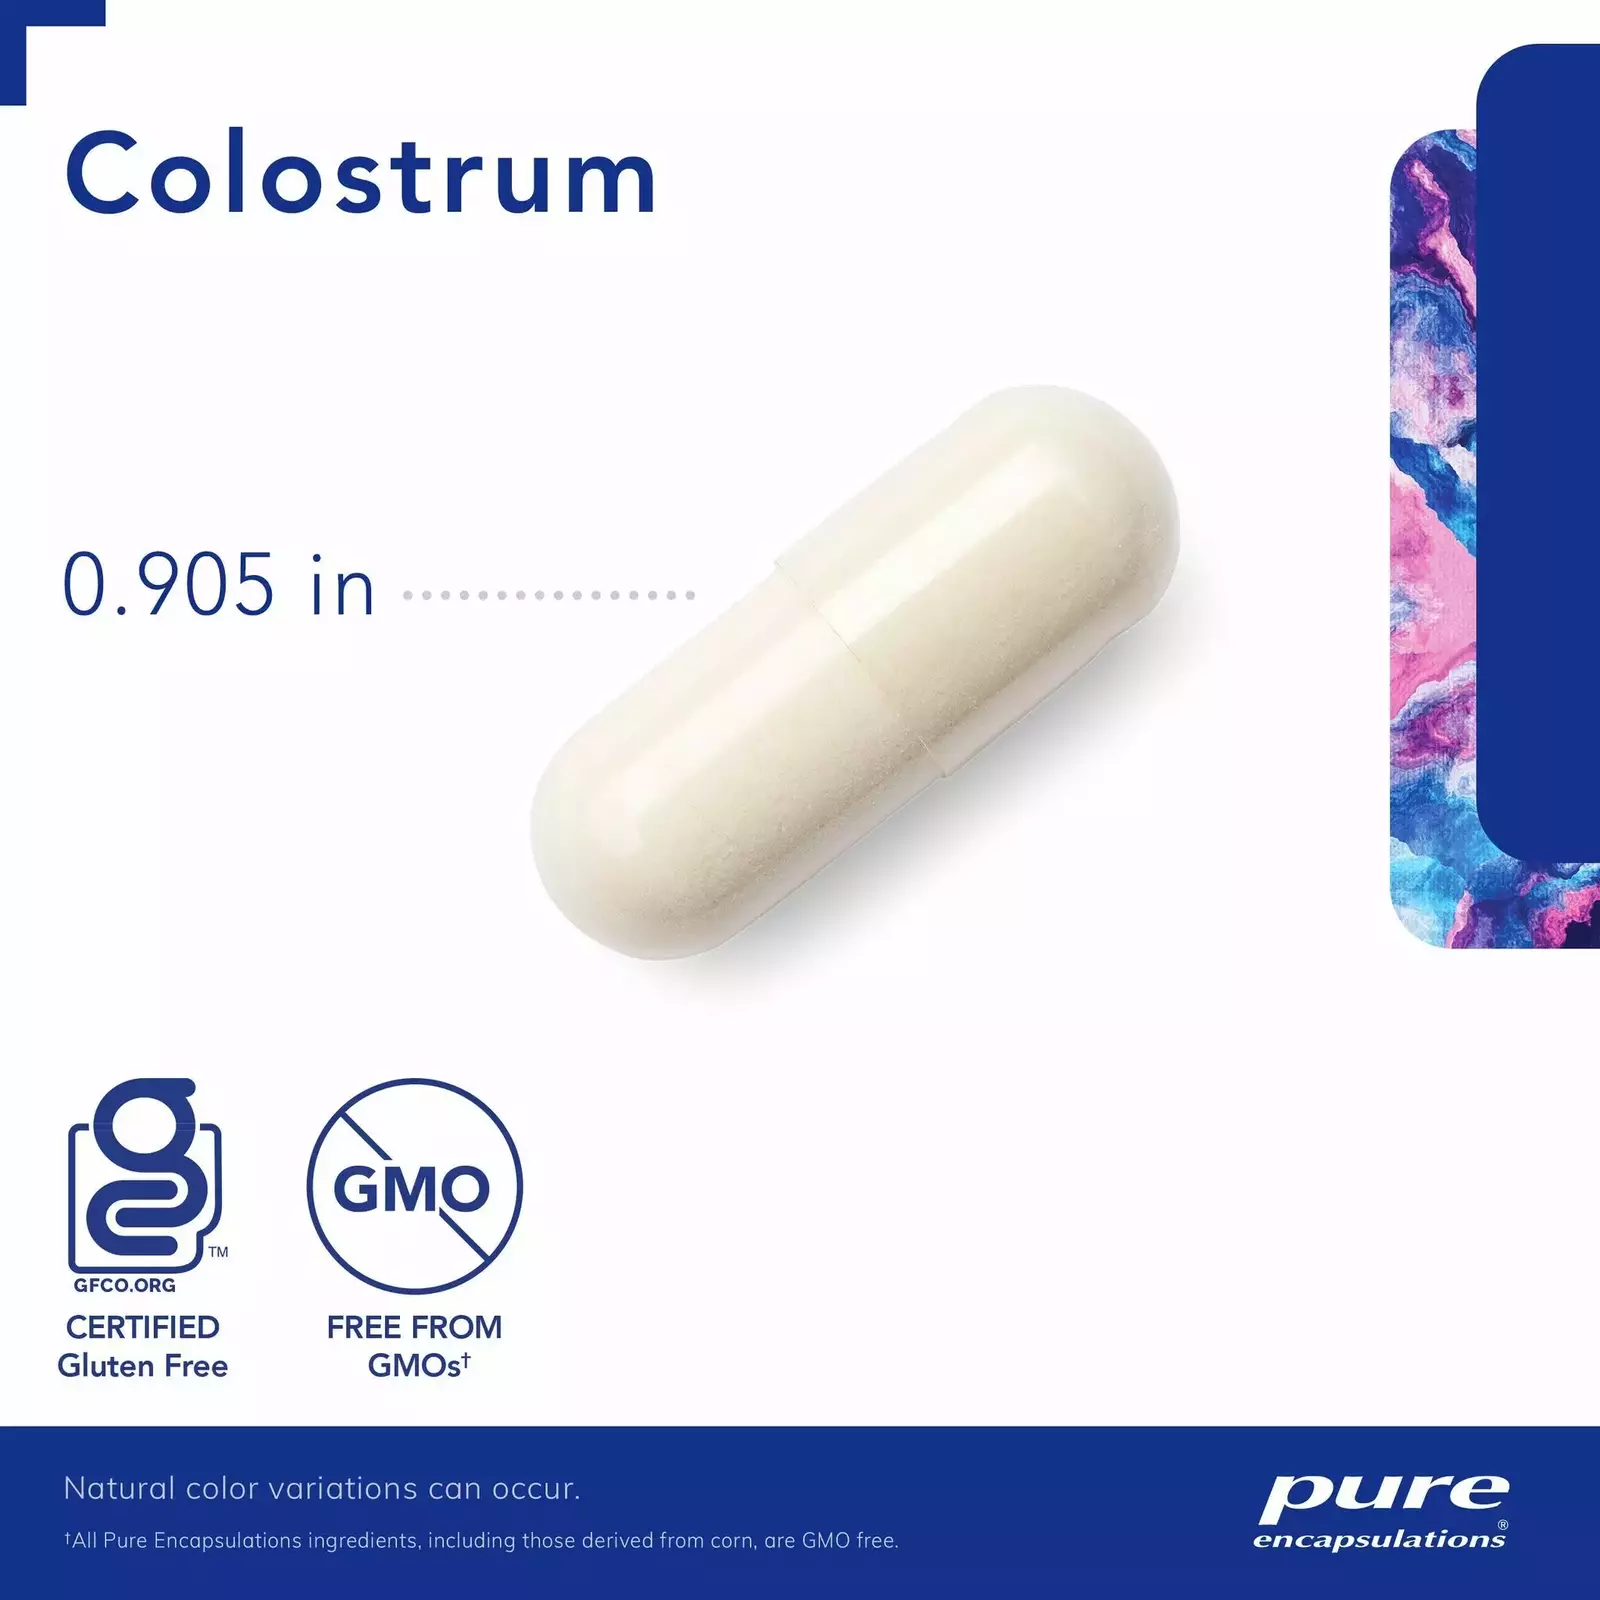 Colostrum 40% IgG